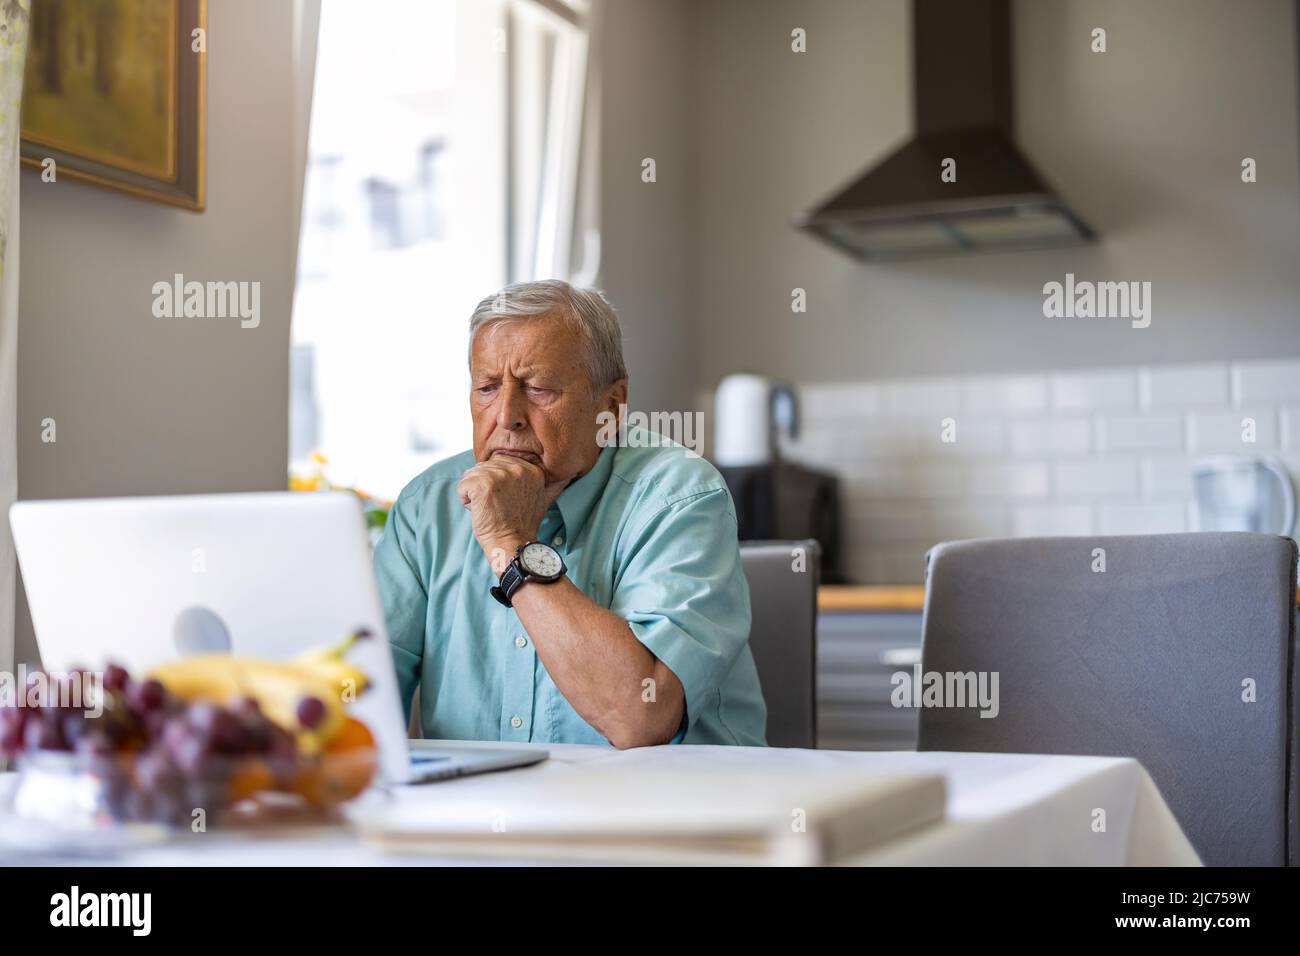 Elderly man using laptop at kitchen table Stock Photo